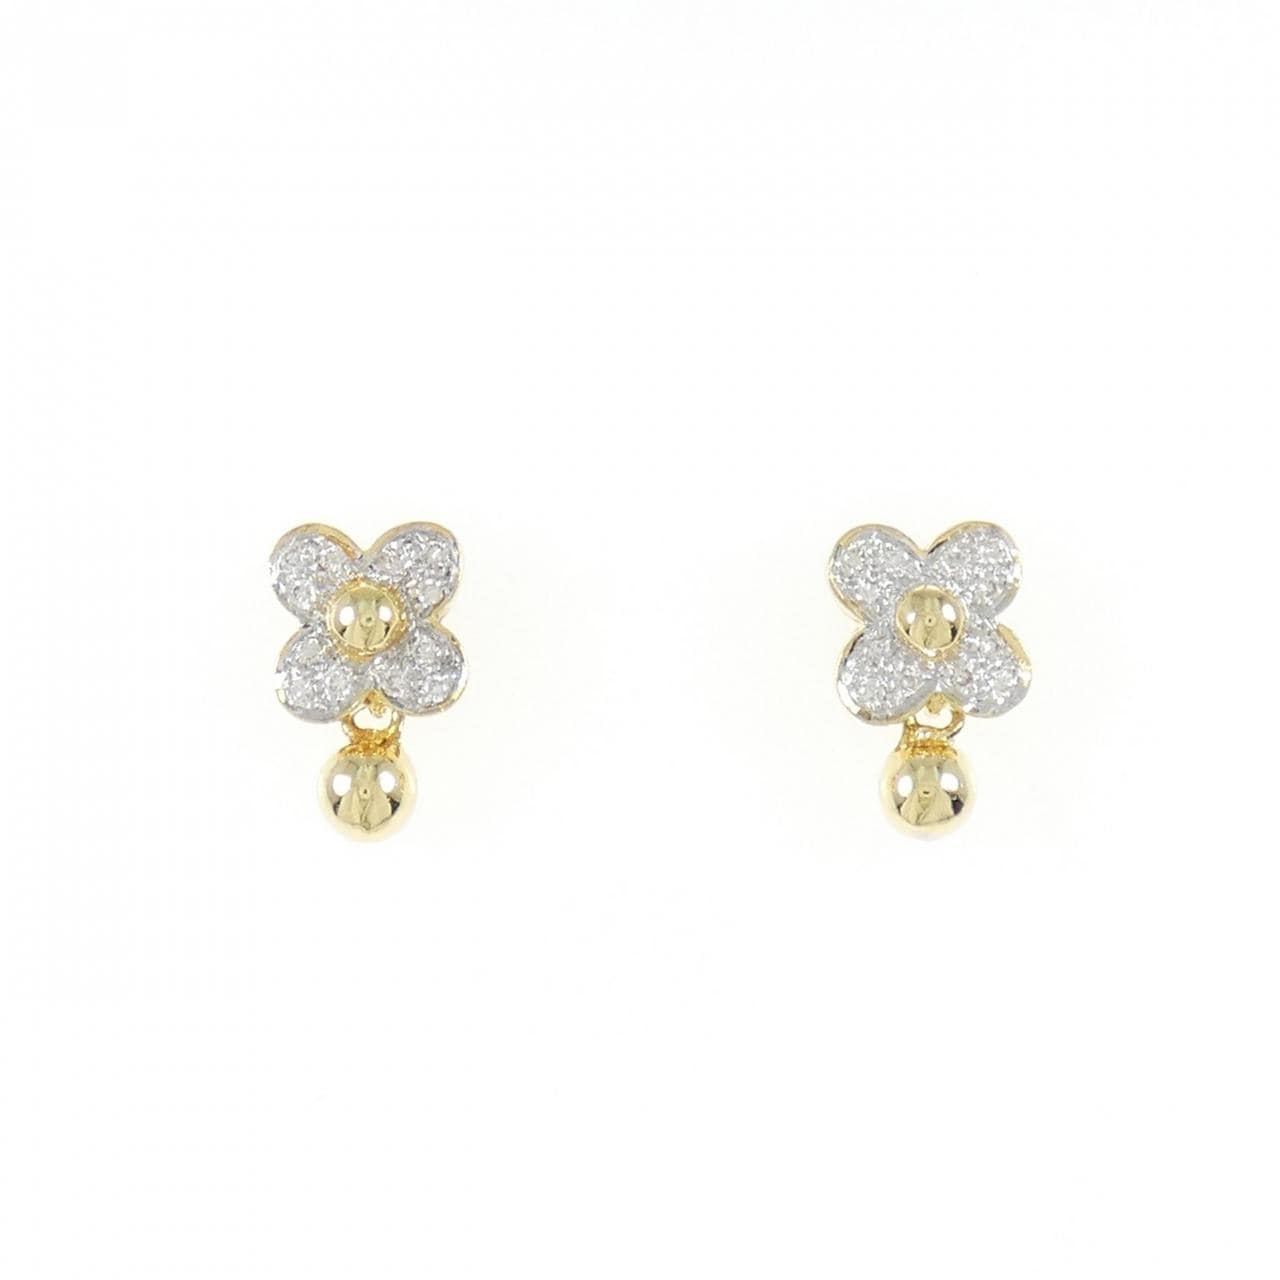 K18YG/K18WG Flower Diamond Earrings 0.12CT